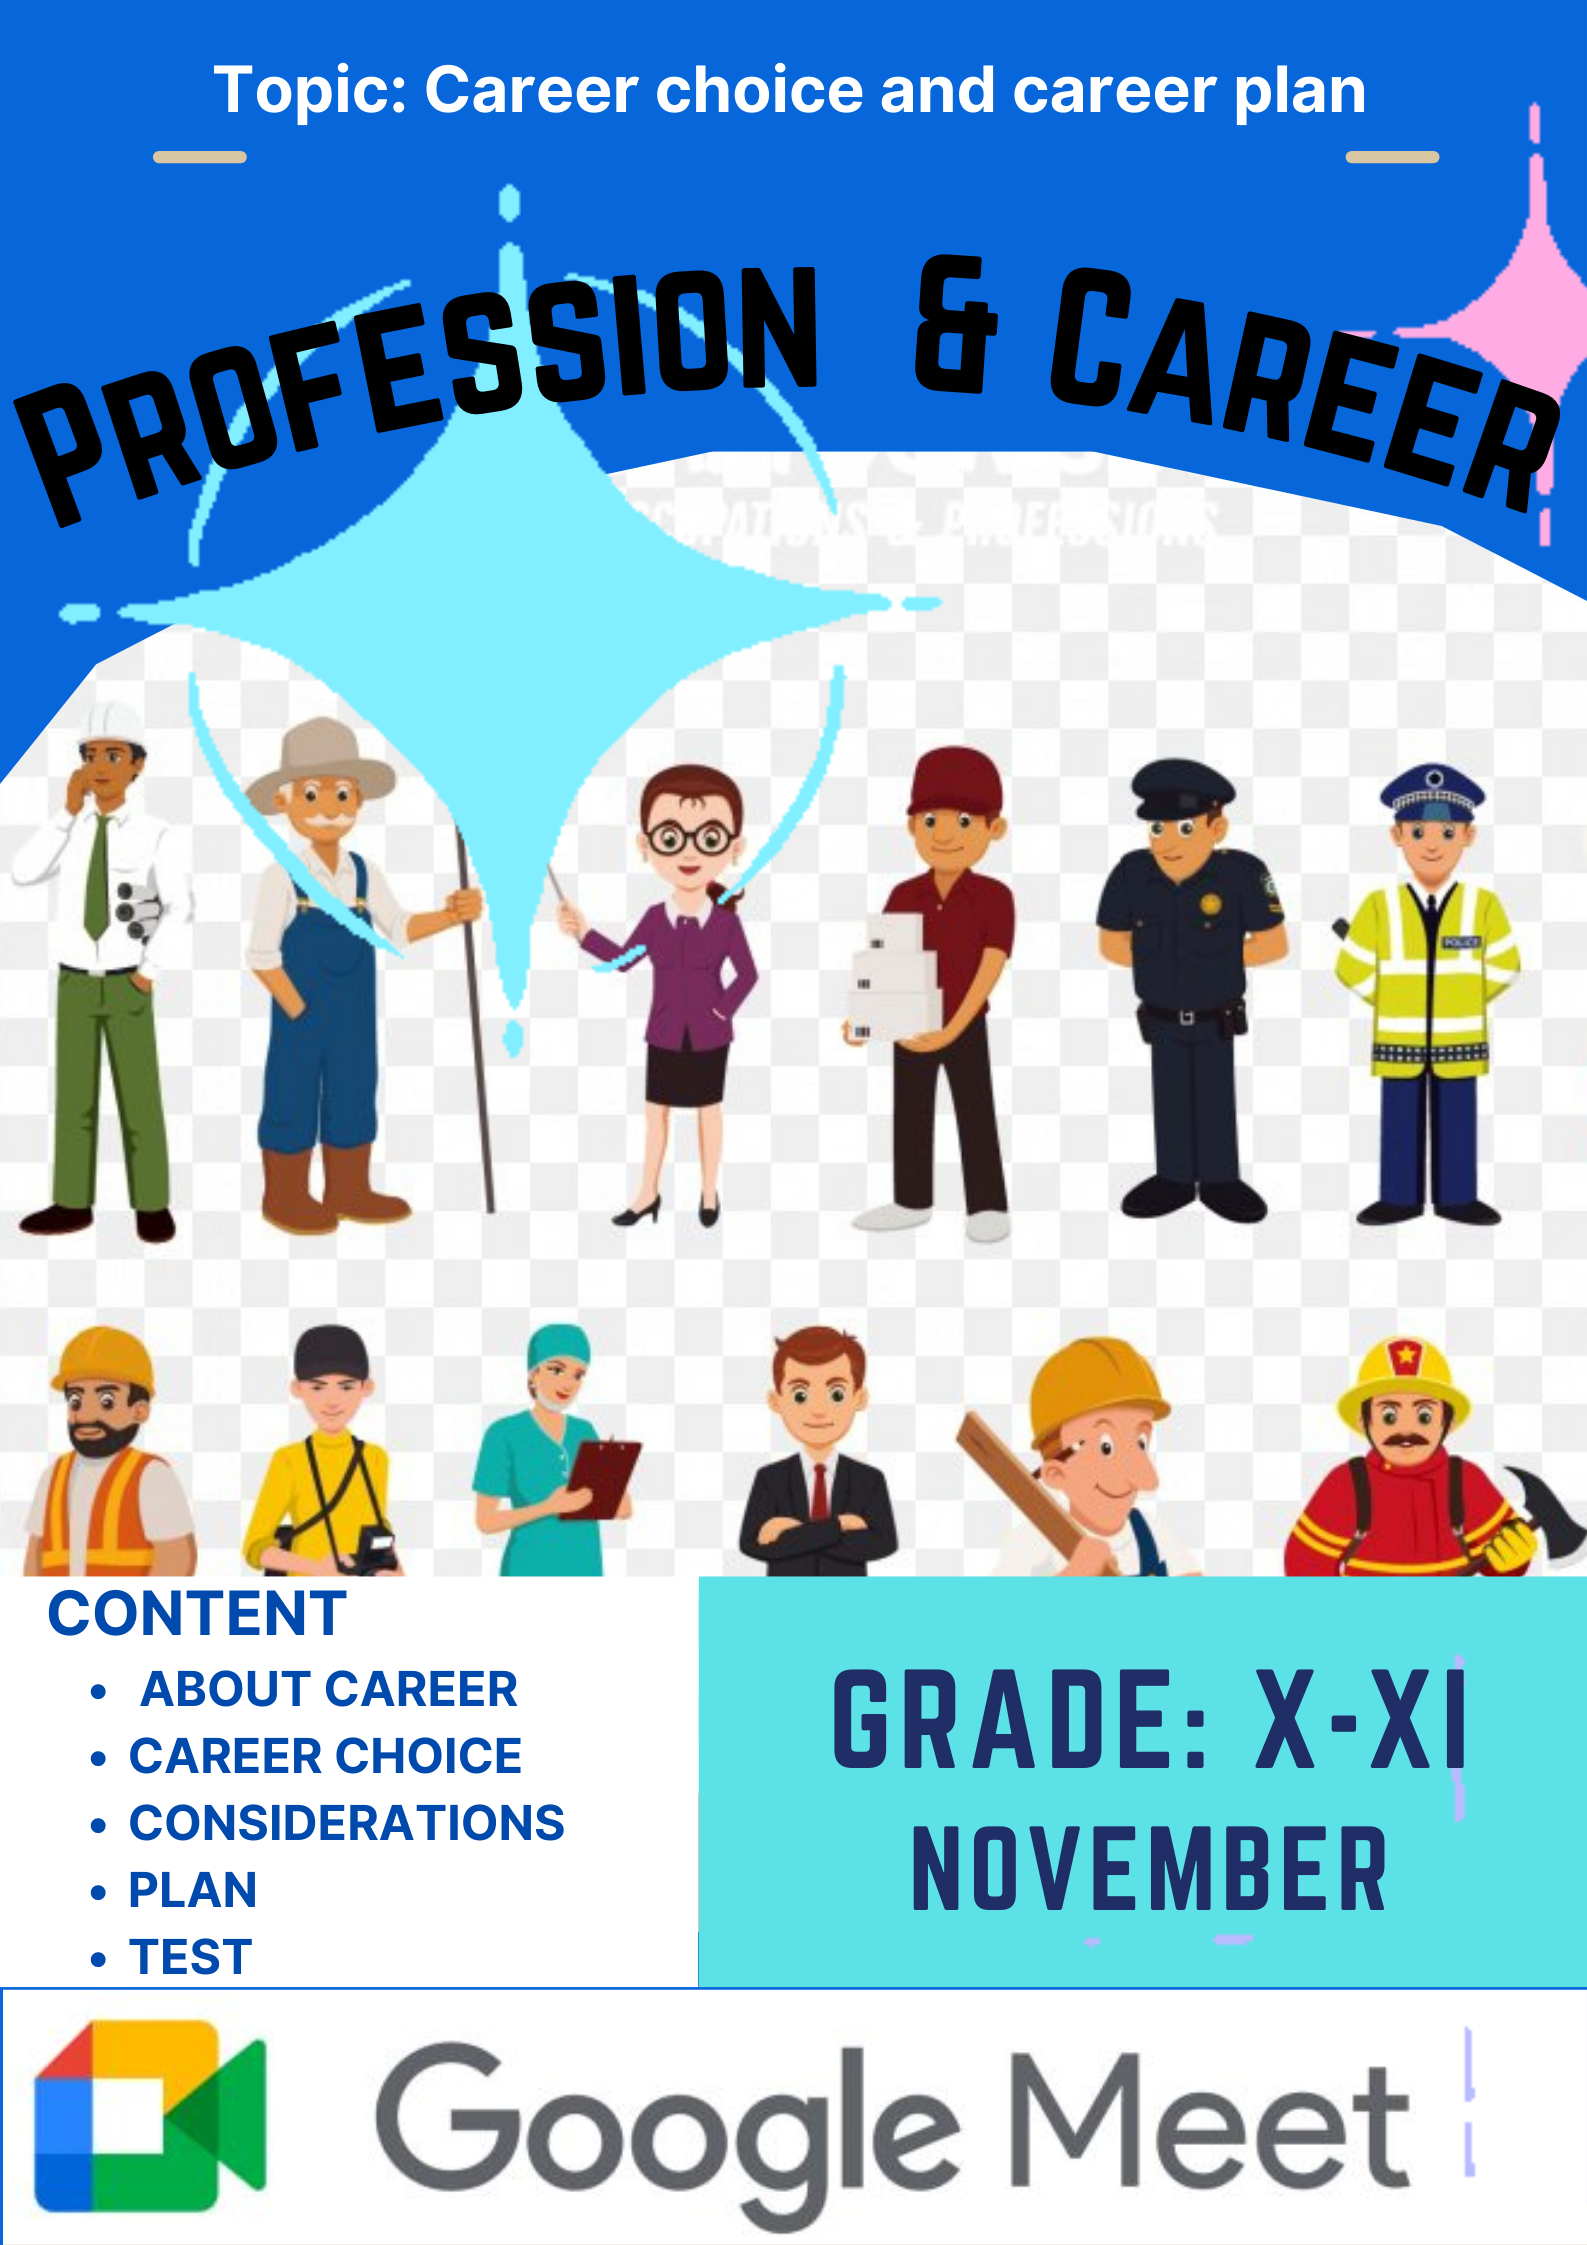 November: Career choice